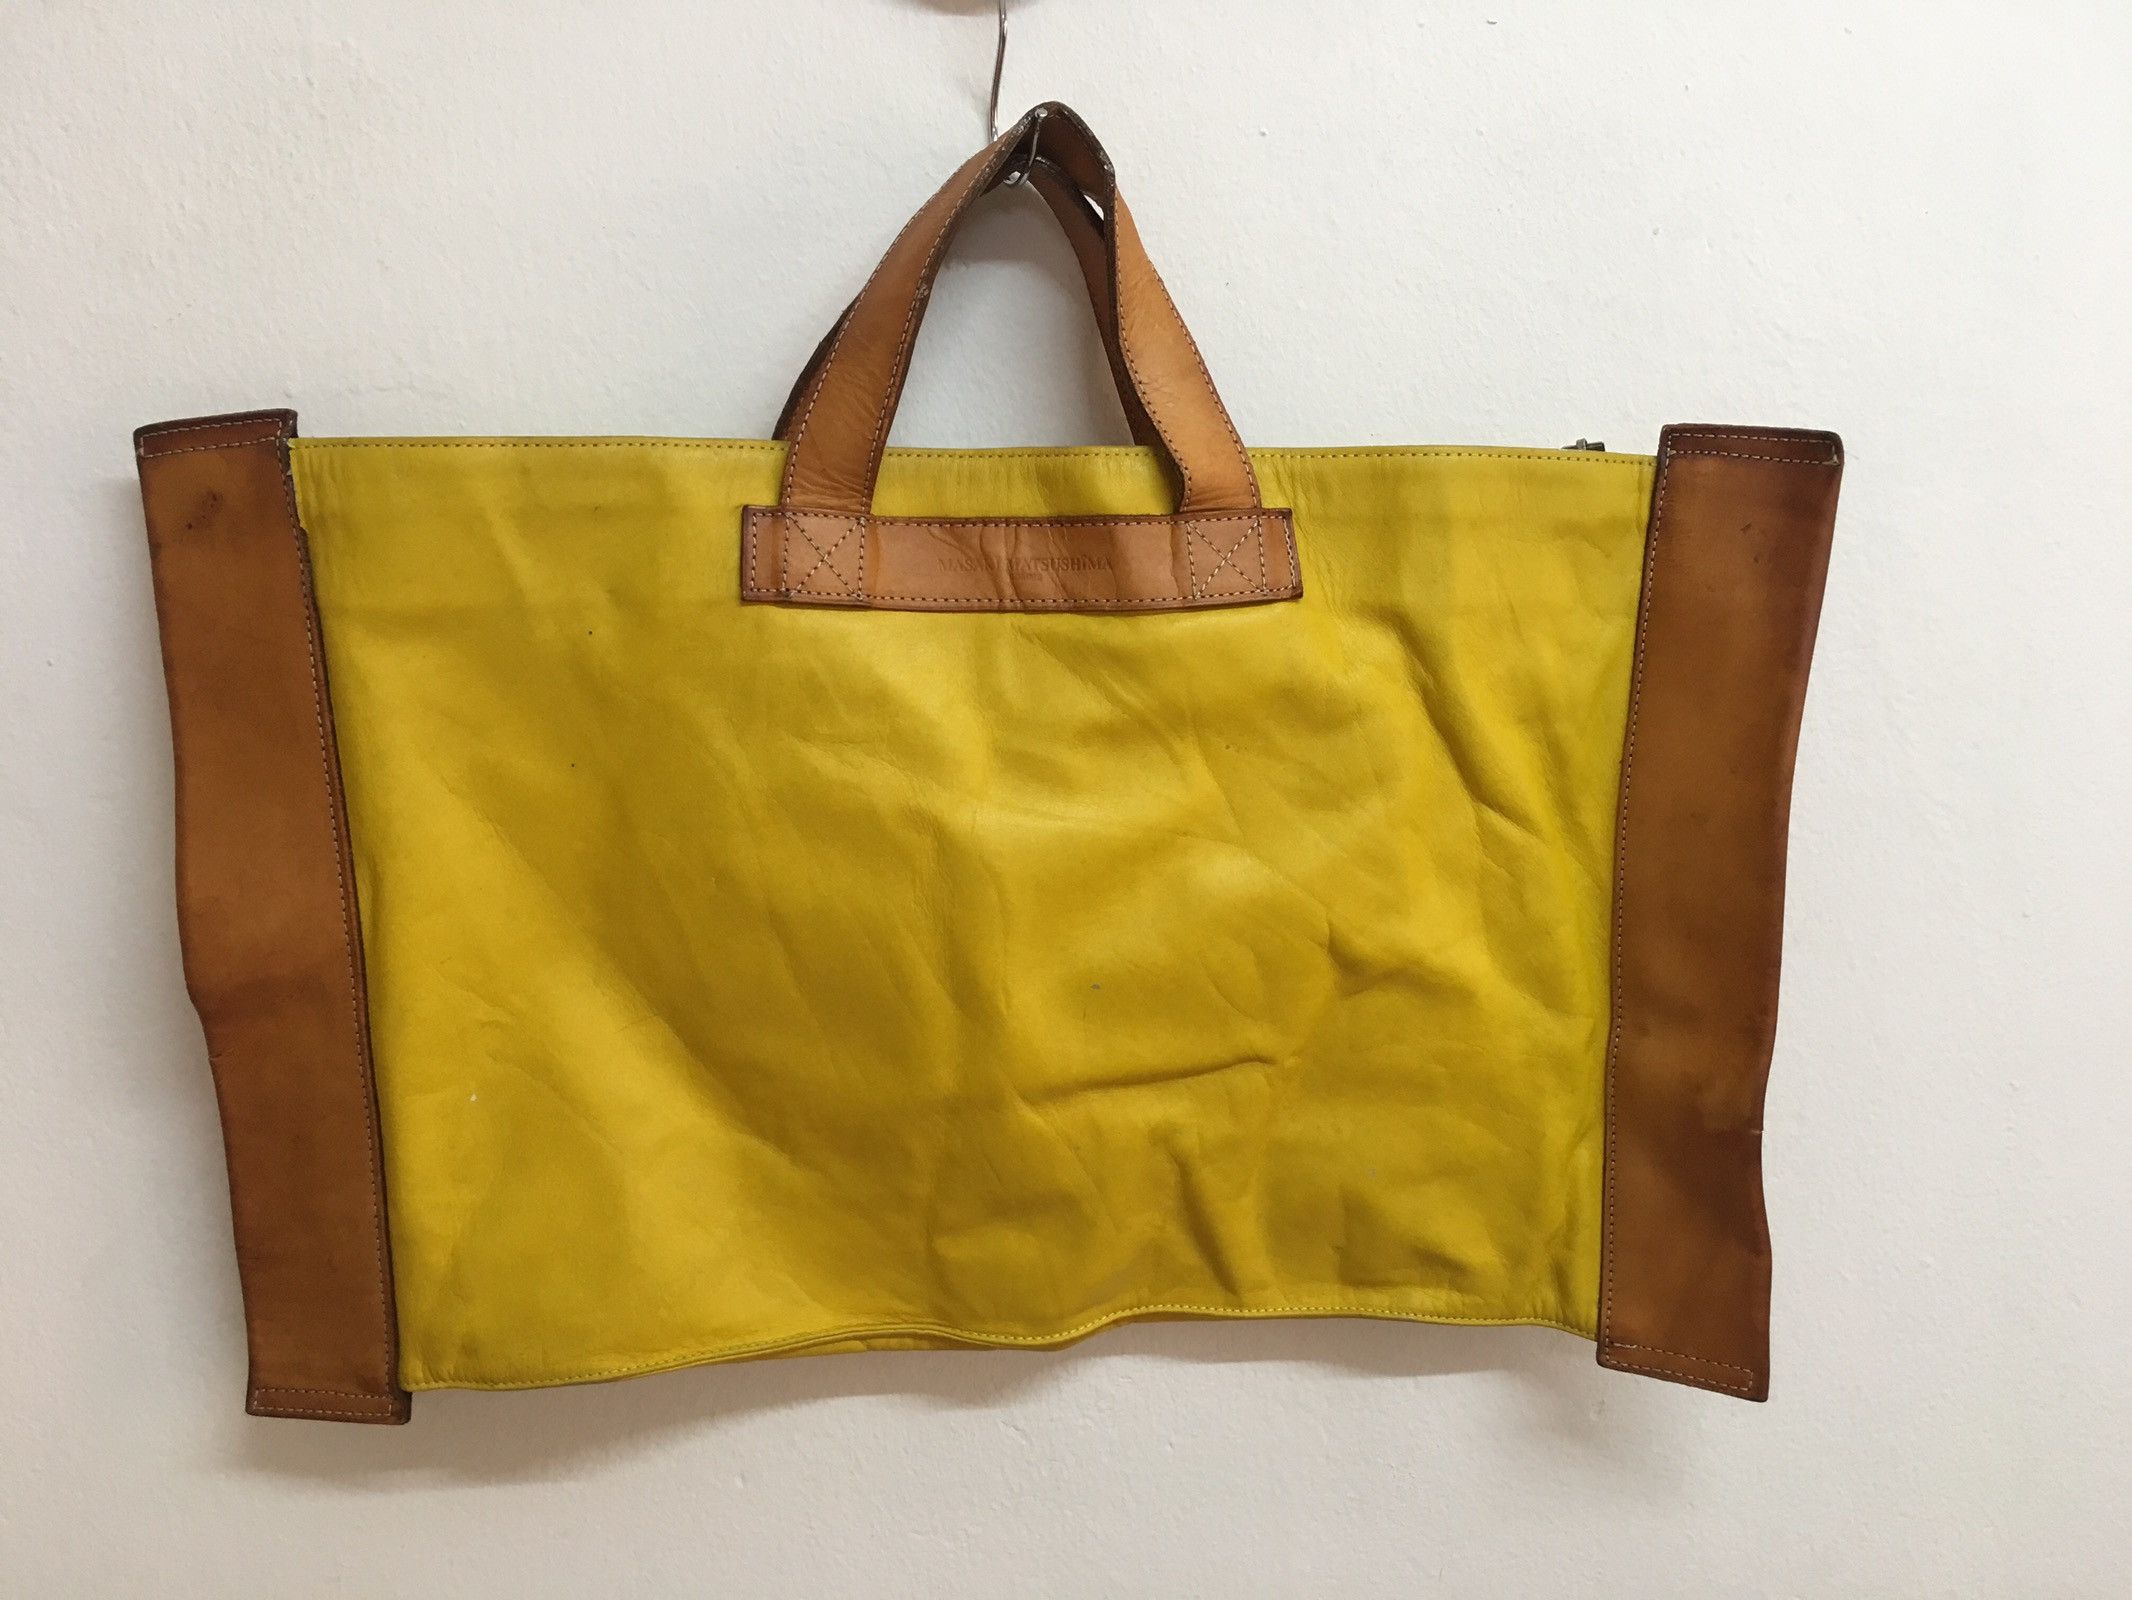 Men's Masaki Matsushima Bags & Luggage | Grailed